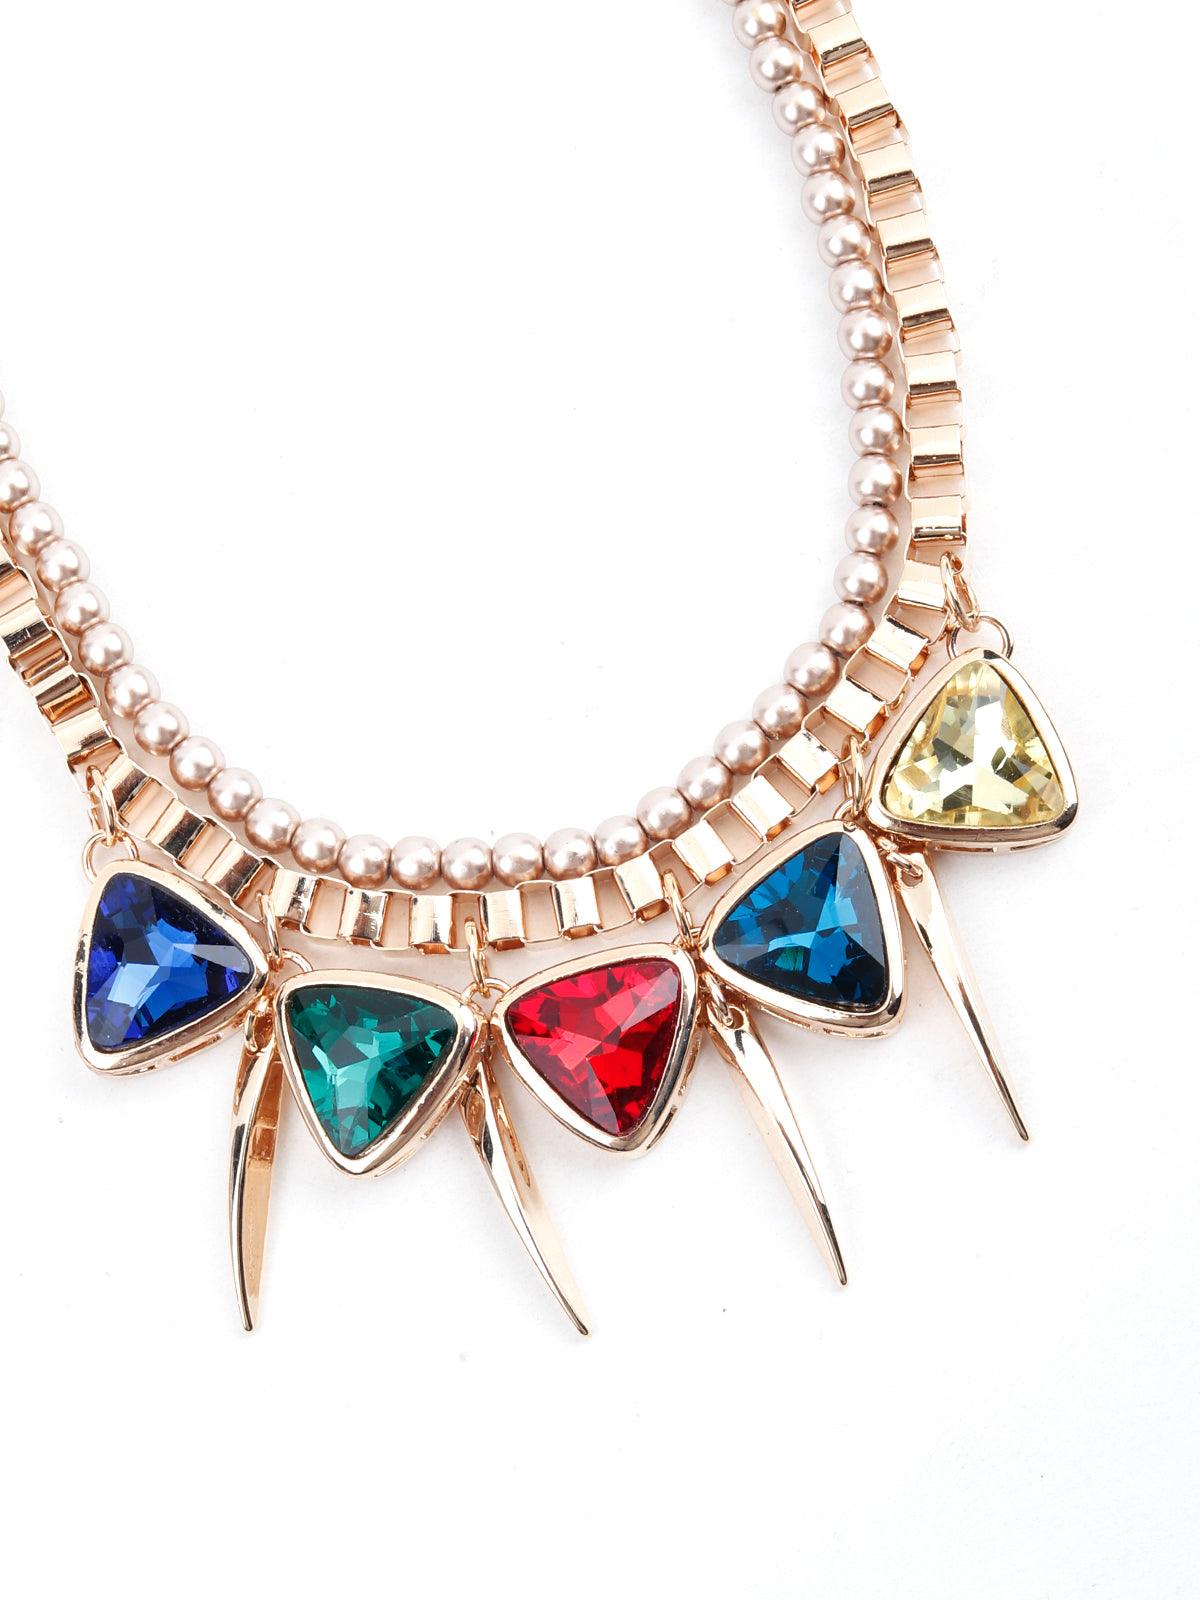 Impressive gold collar necklace with multi-coloured stones - Odette